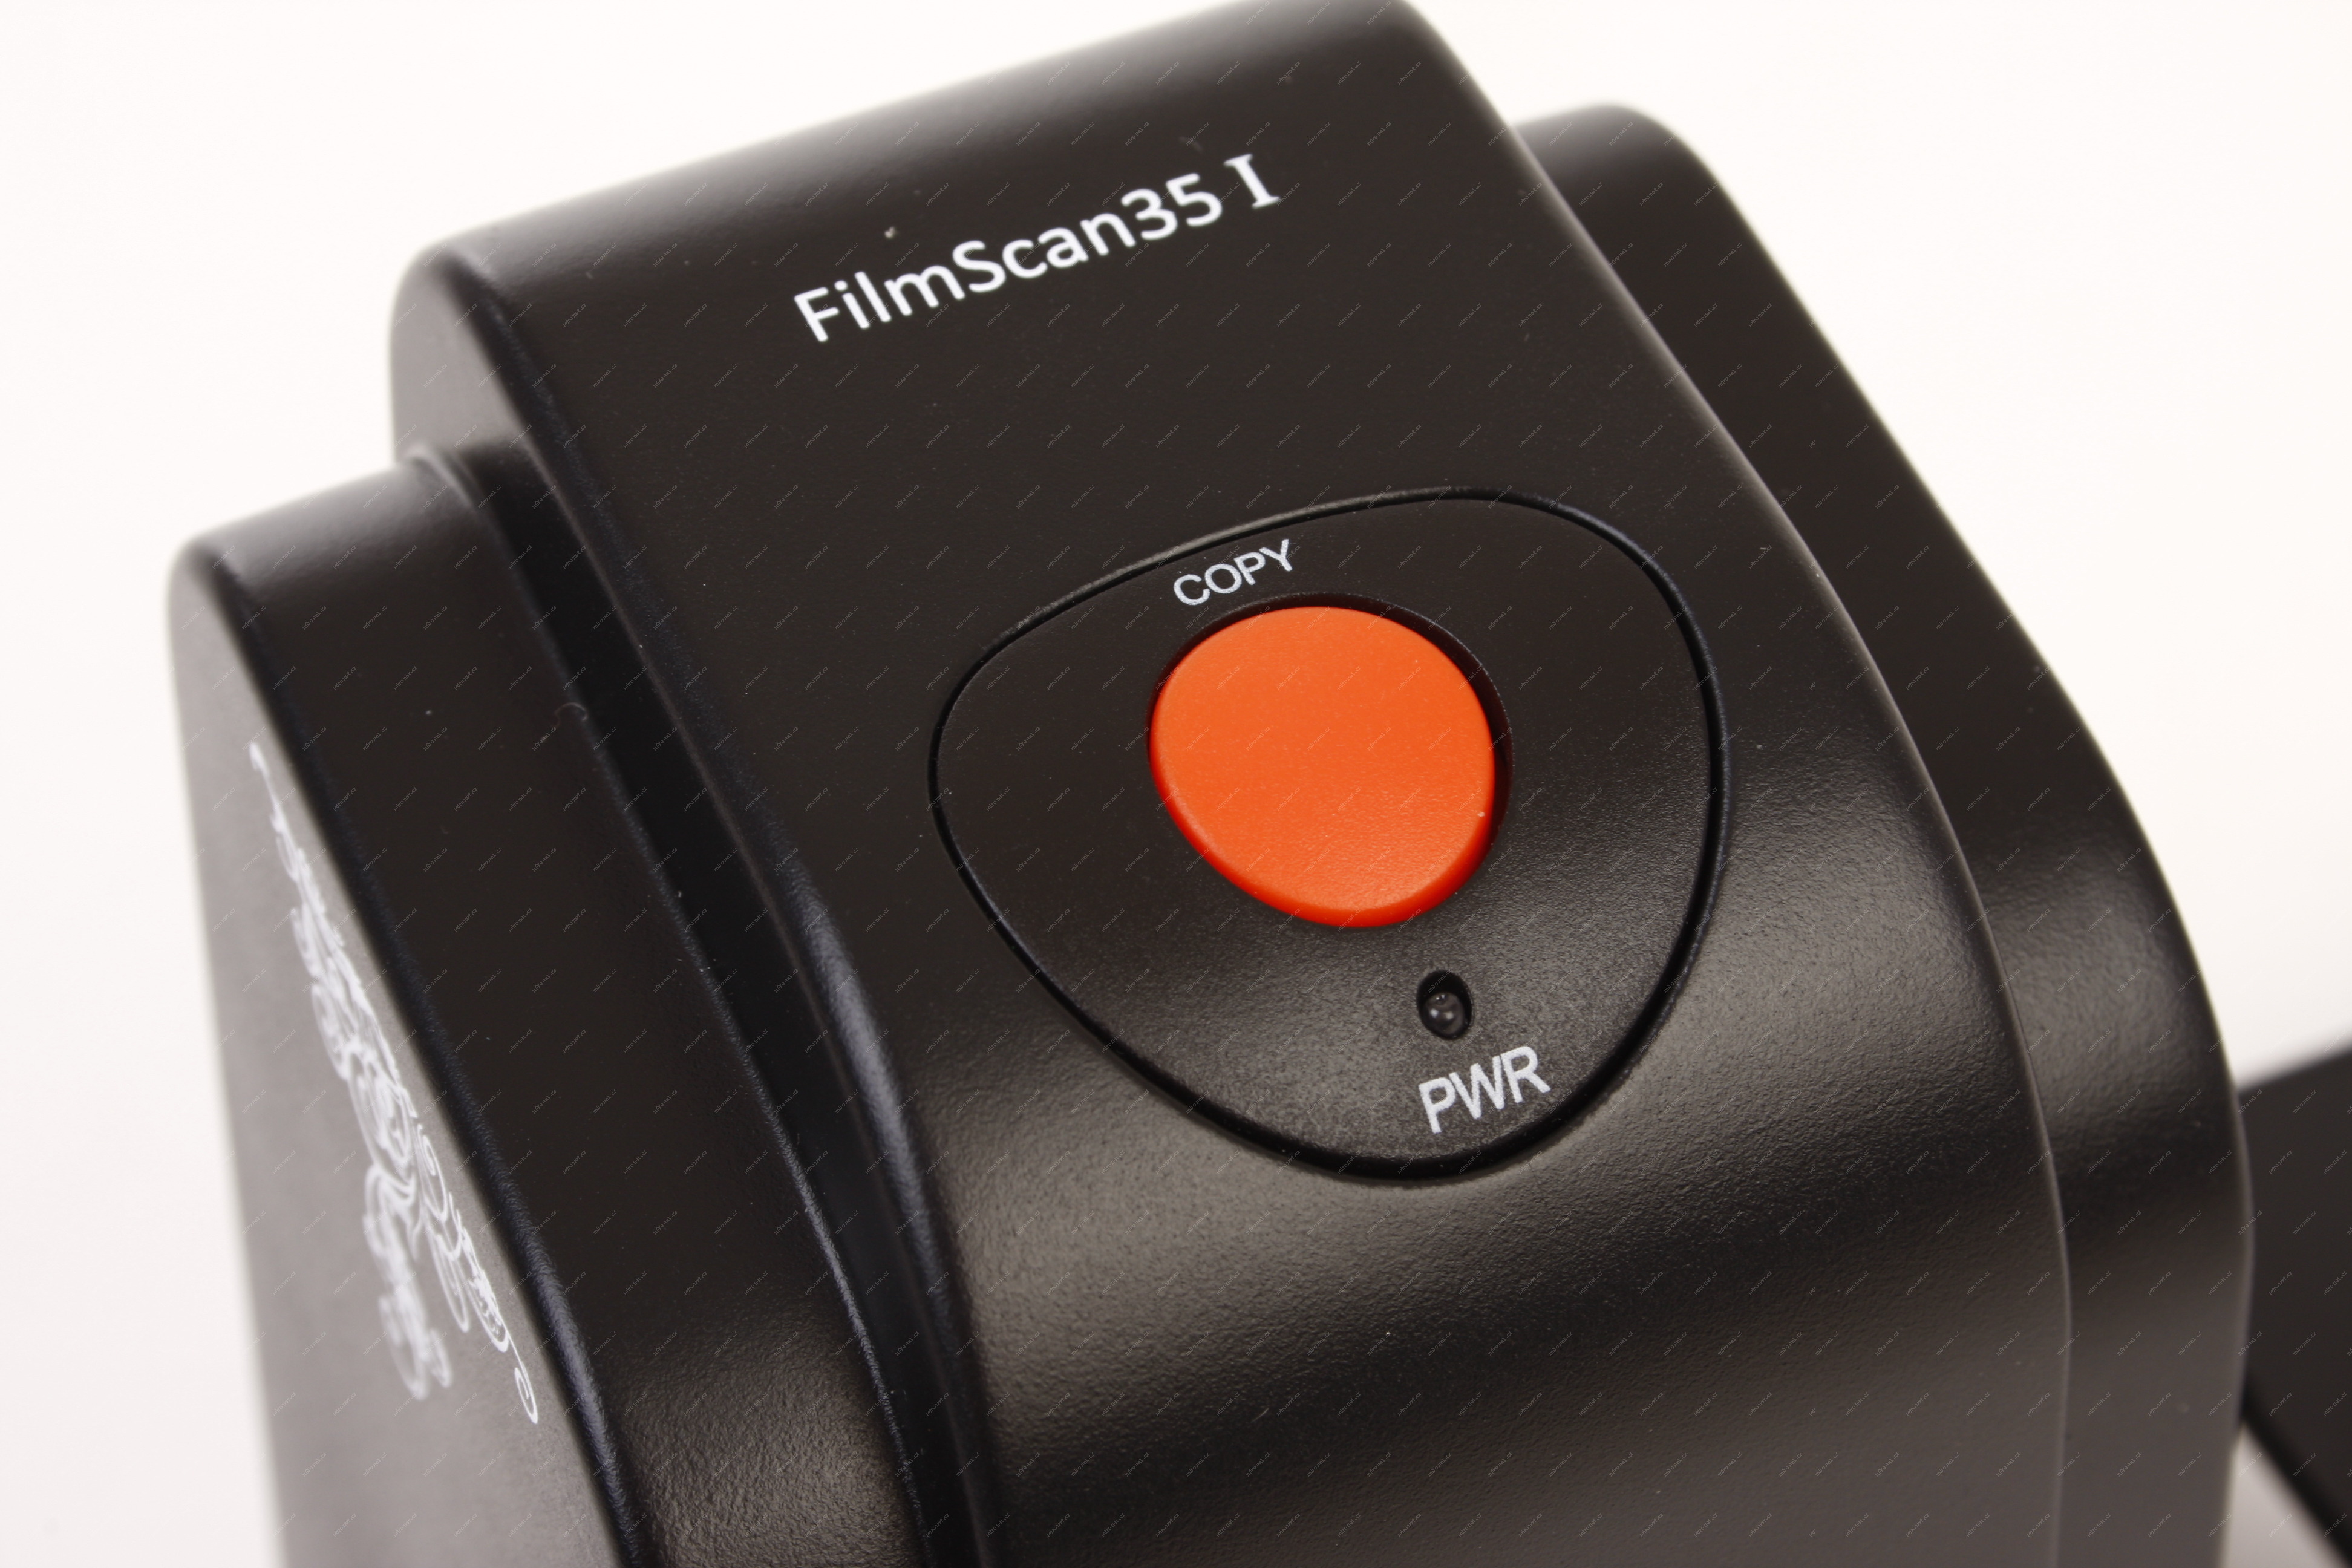 innovative technology filmscan 35 i software